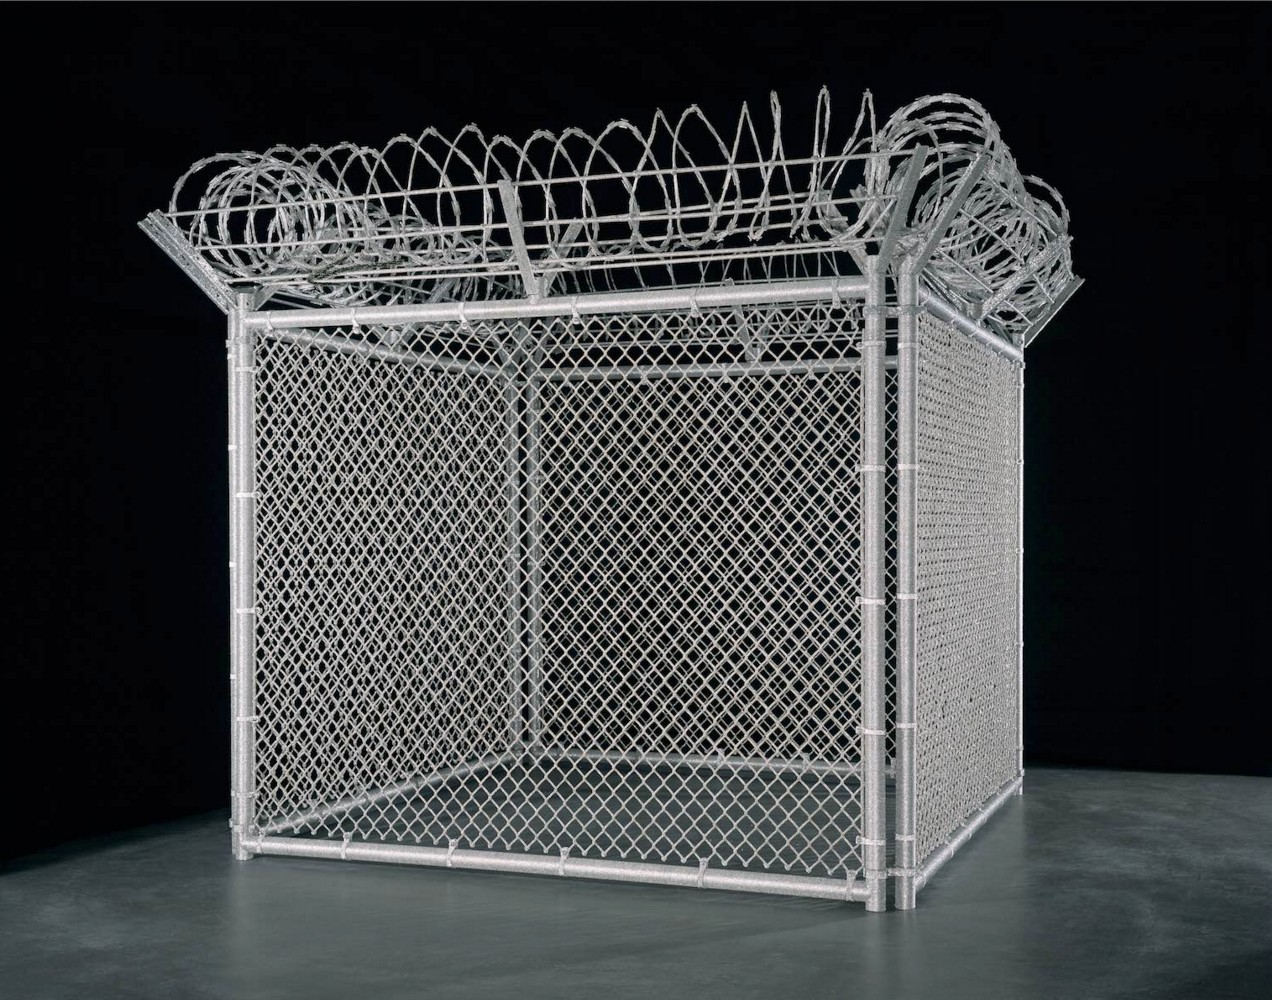 Liza Lou, Security Fence (2005)